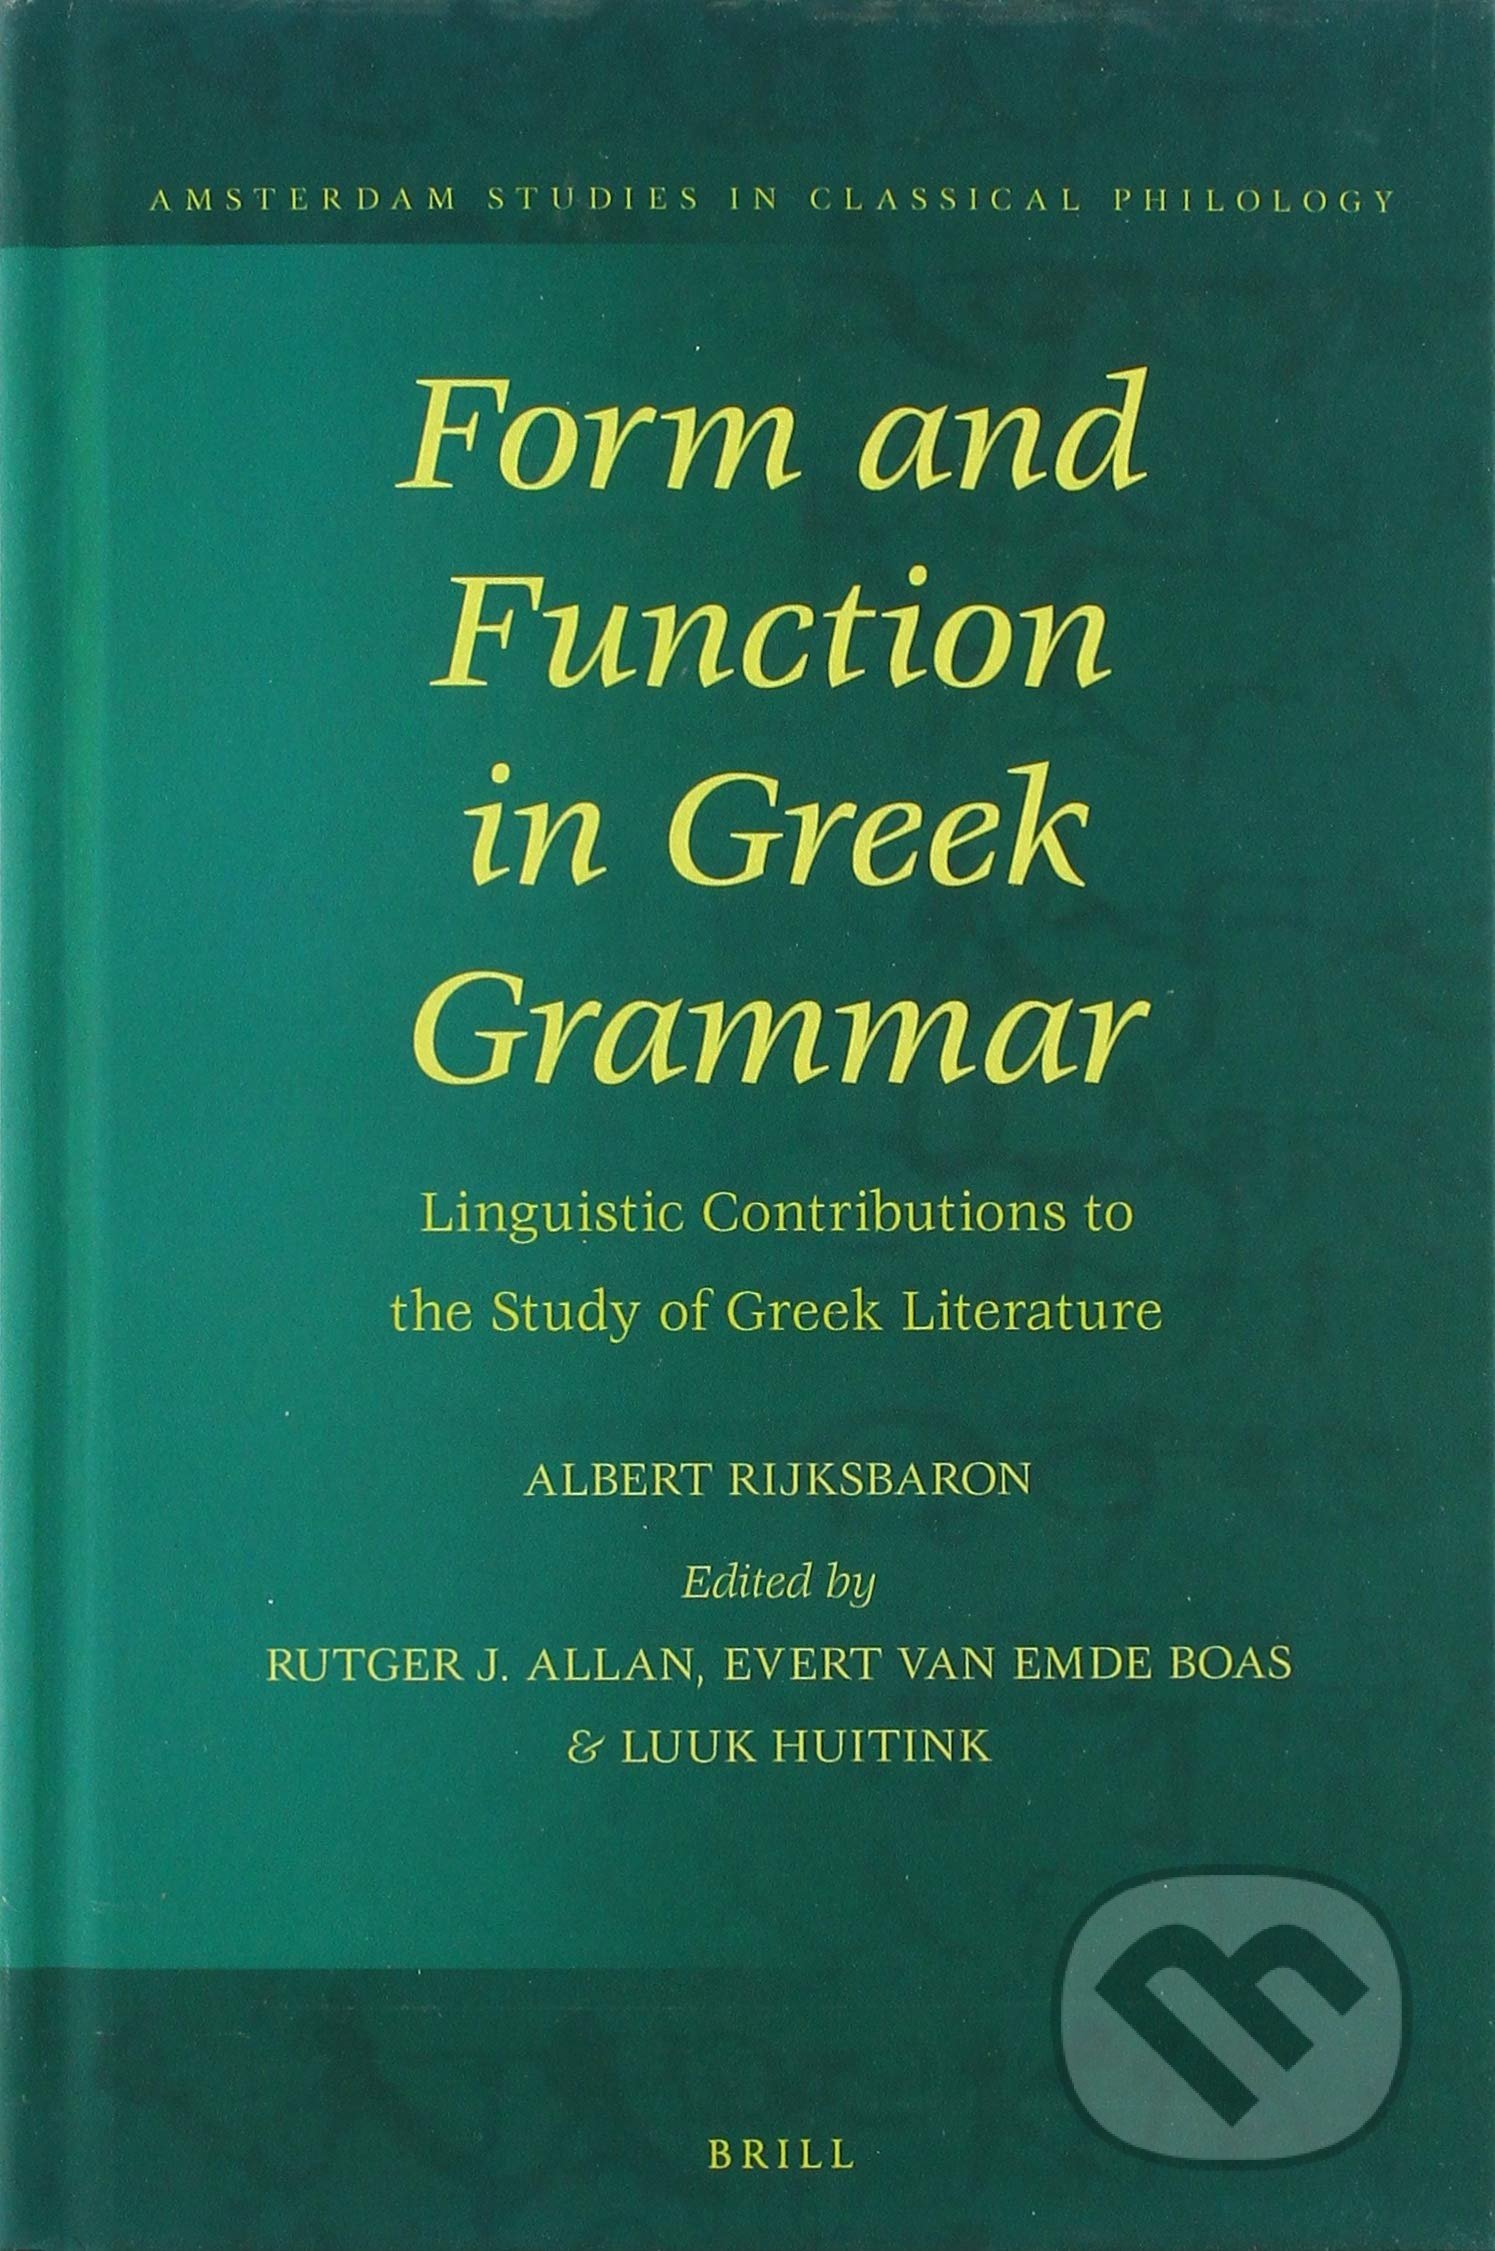 Form and Function in Greek Grammar - Albert Rijksbaron, Rutger J. Allan, Evert van Emde Boas, Luuk Huitink, Brill, 2018